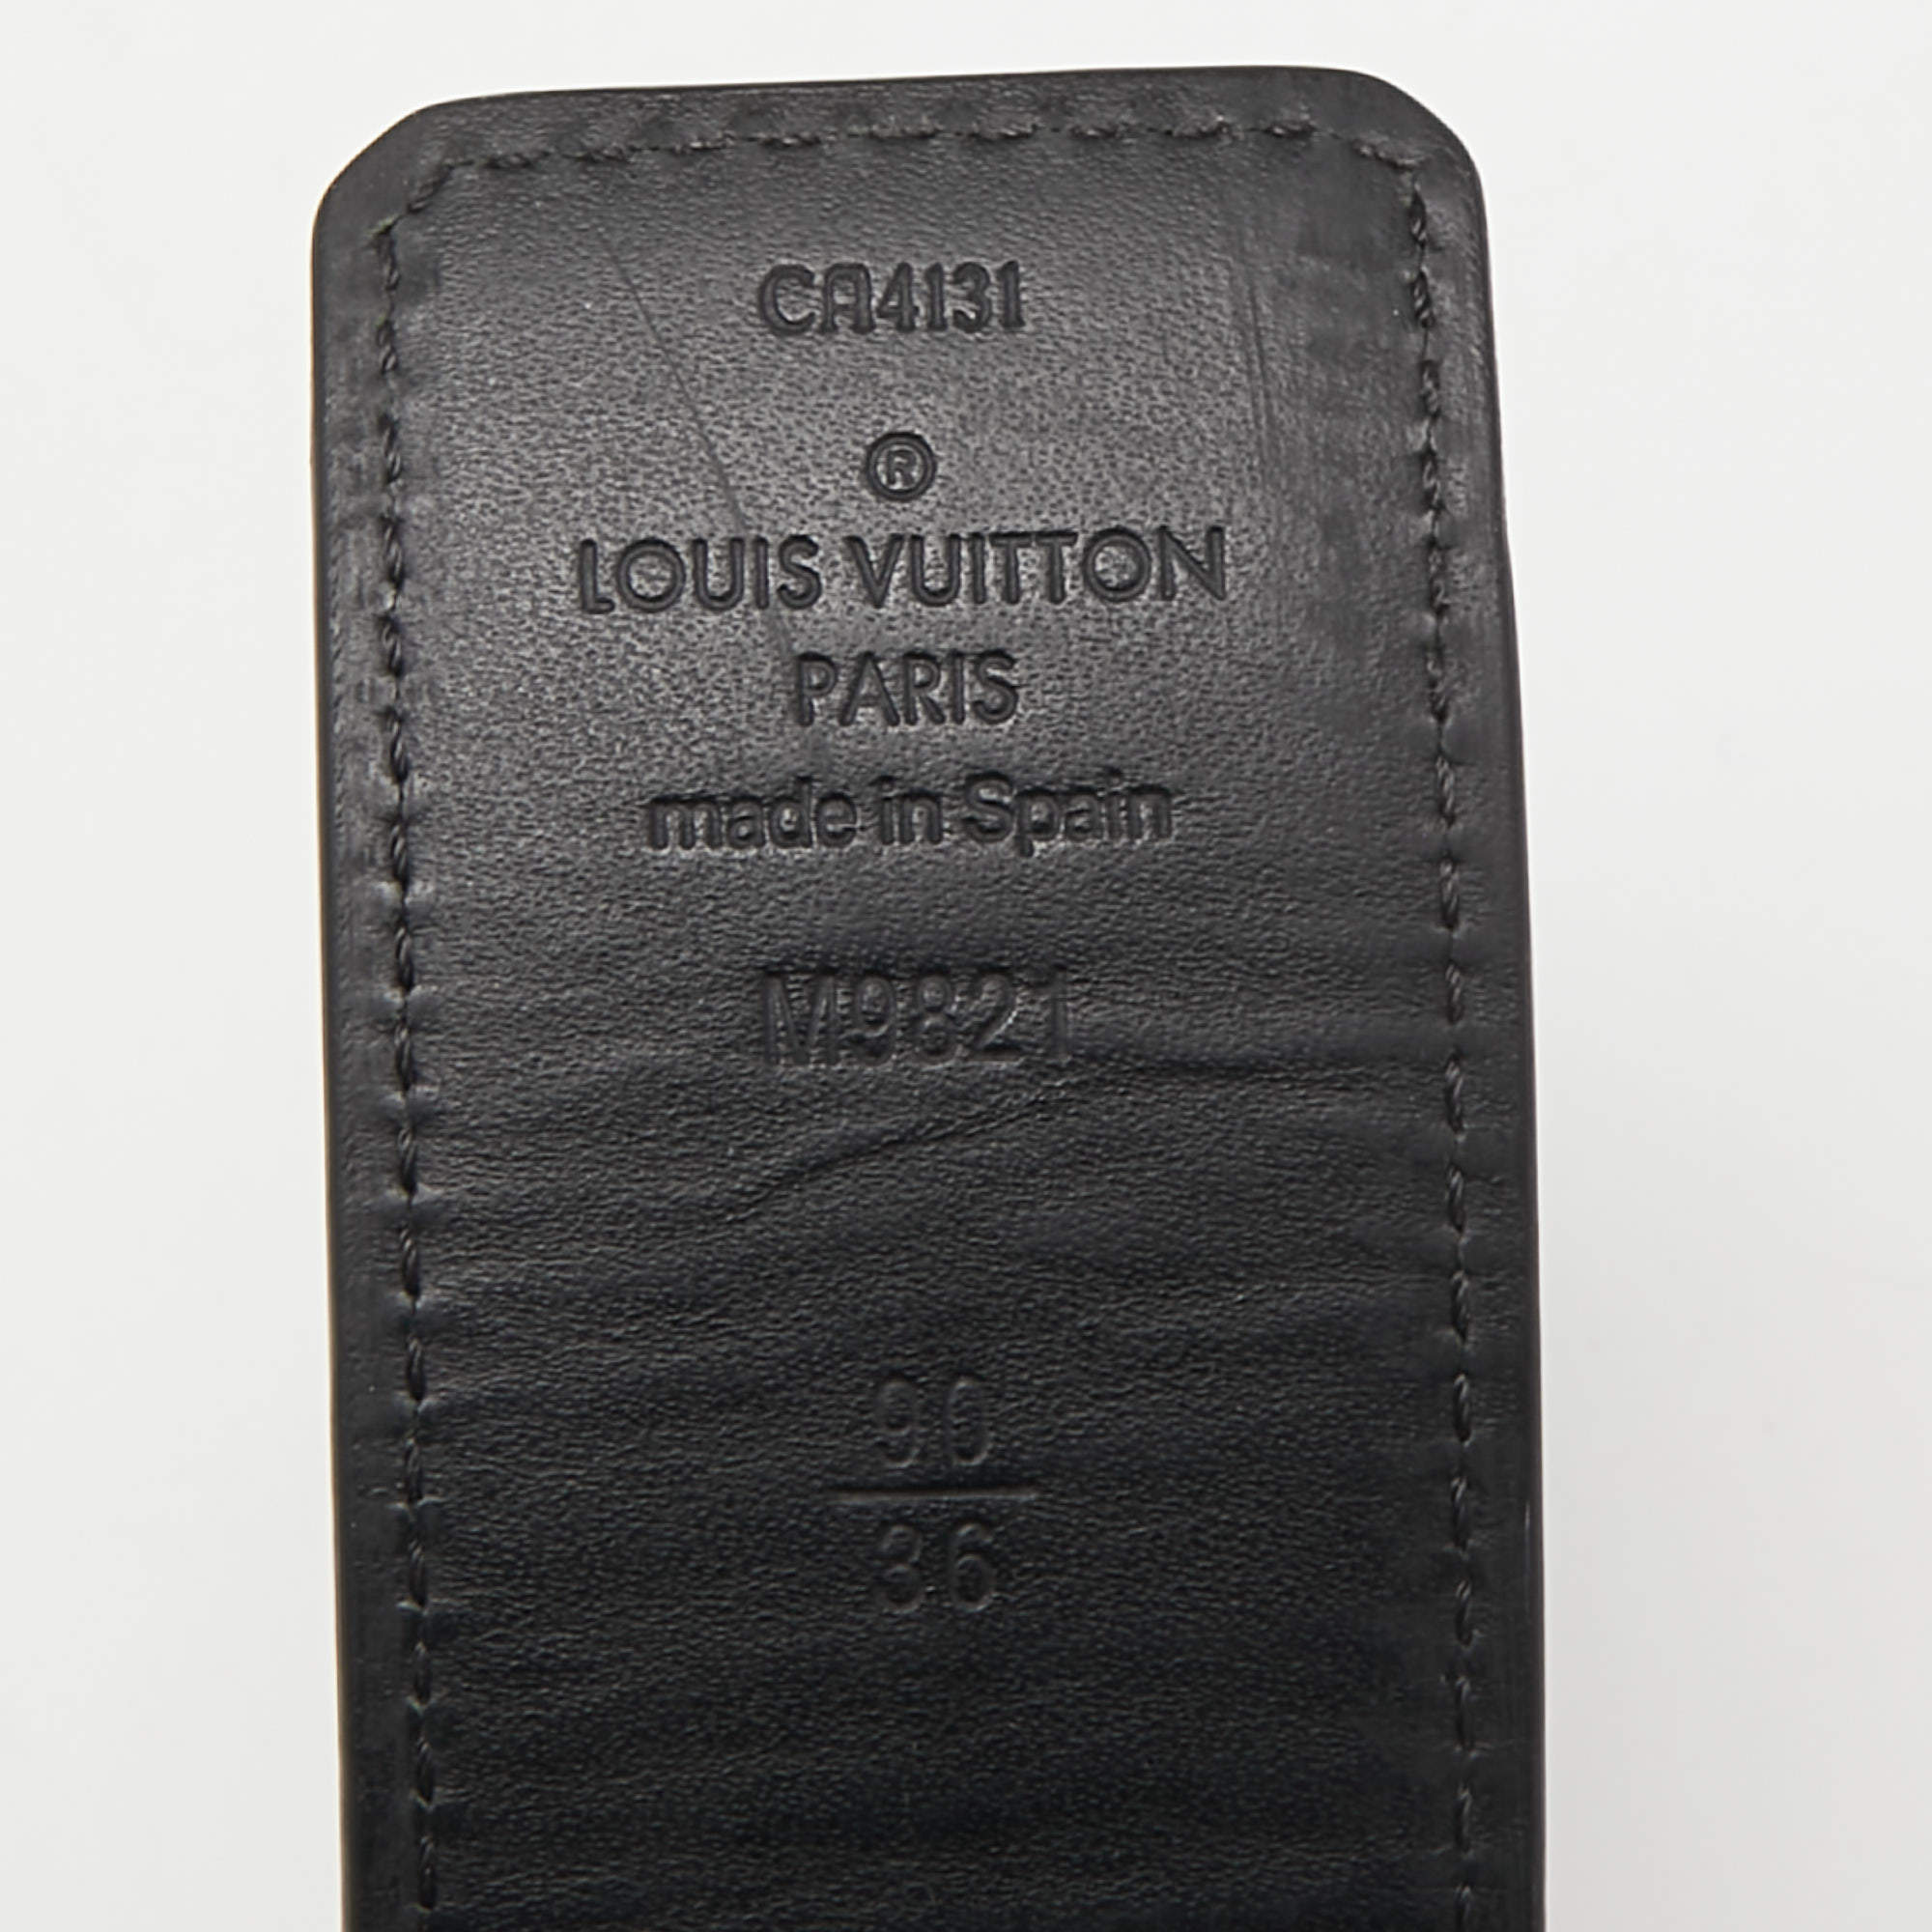 Signature leather belt Louis Vuitton Black size 90 cm in Leather - 35224910